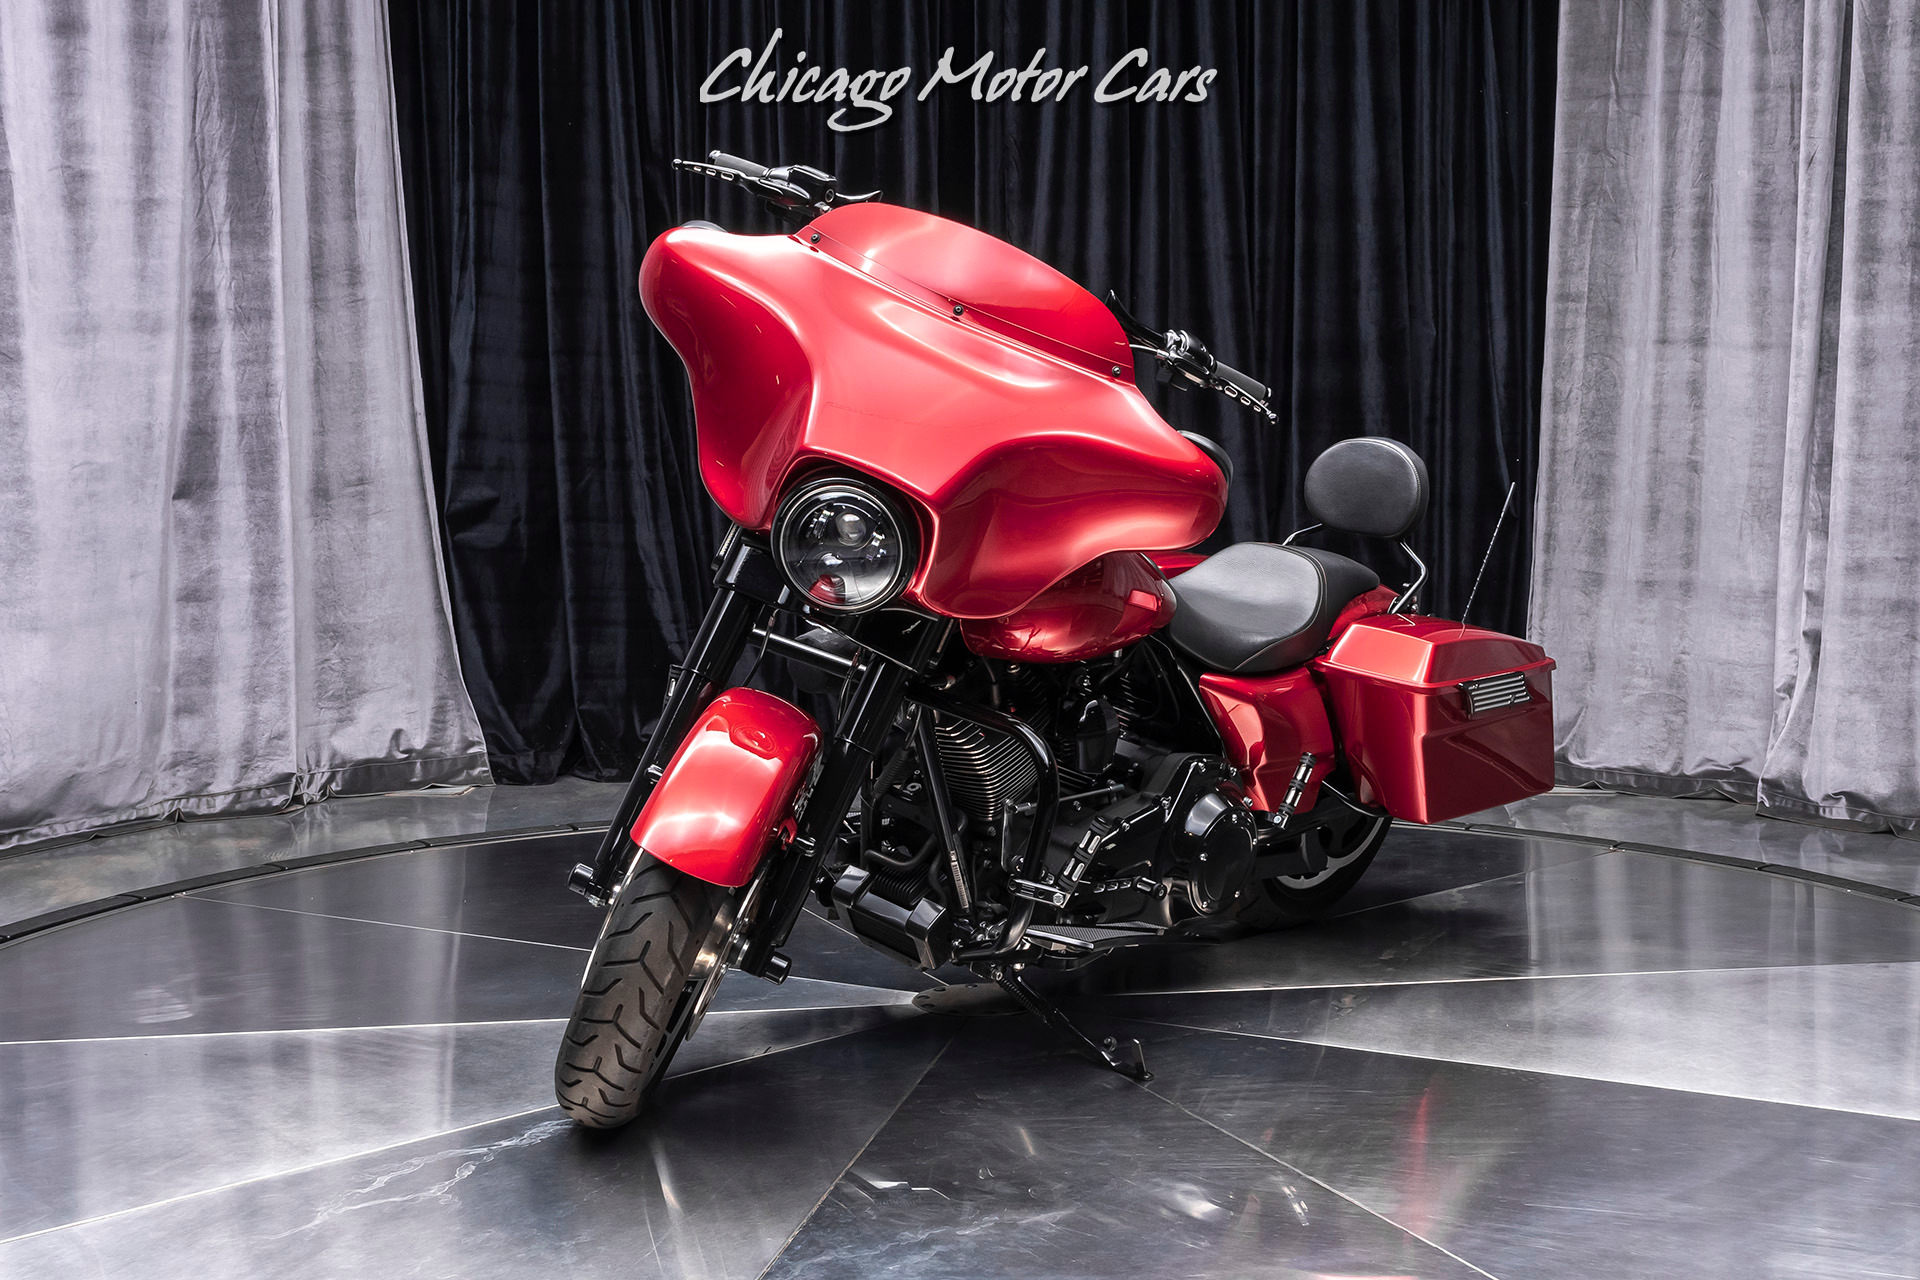 Used 2013 Harley-Davidson Street Glide Motorcycle For Sale